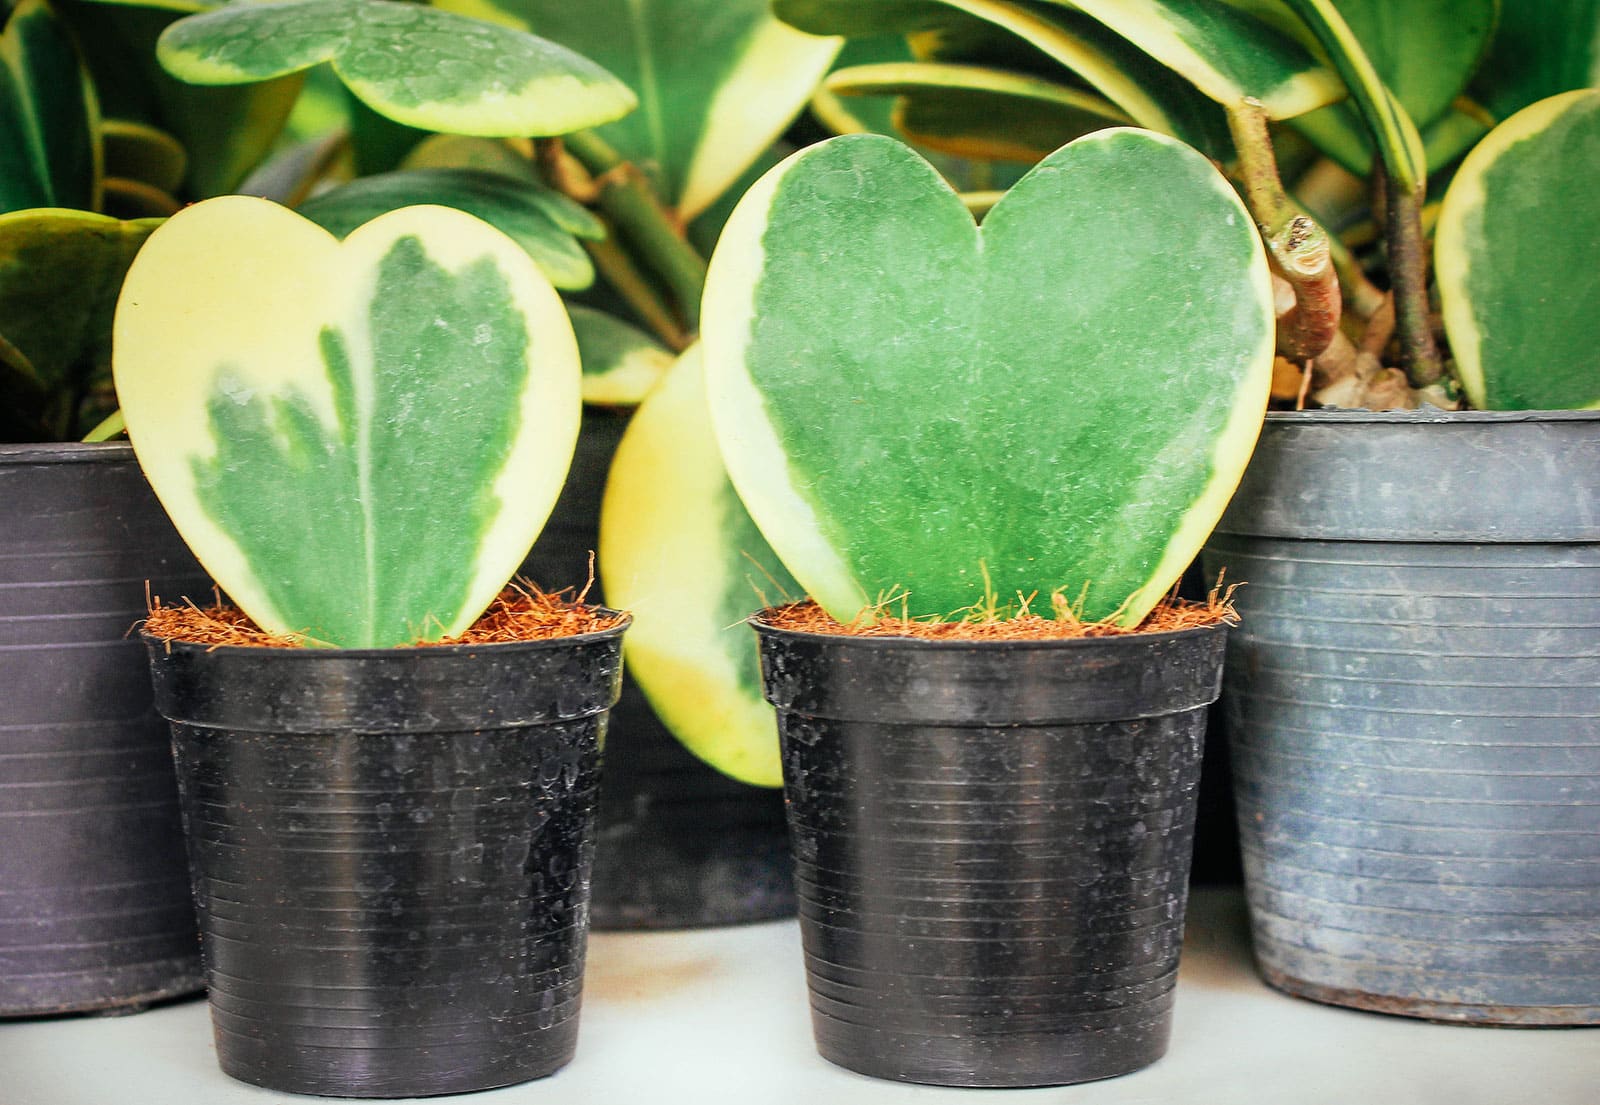 Hoya kerrii (sweetheart Hoya) single leaf plants in black pots